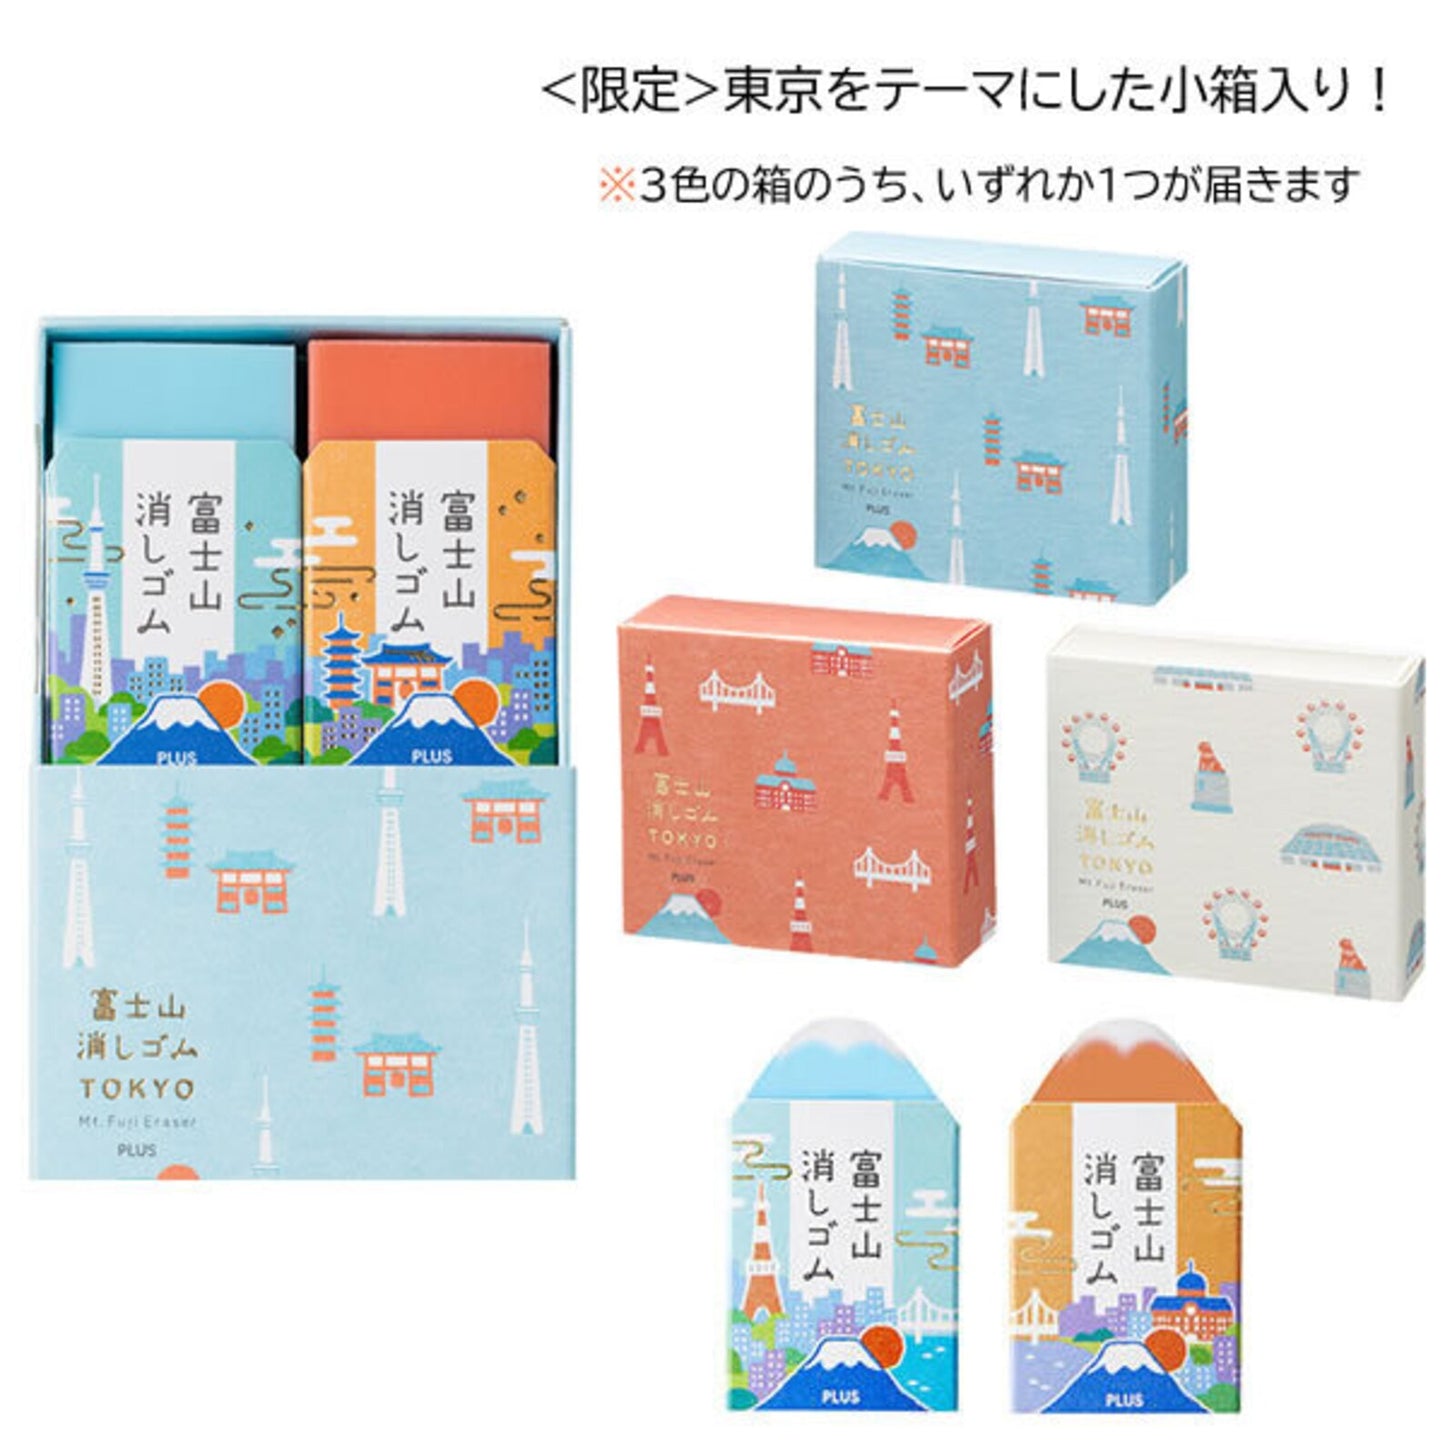 Tokyo Limited Edition Twin Pack / Air Inn Mt. Fuji Eraser · PLUS